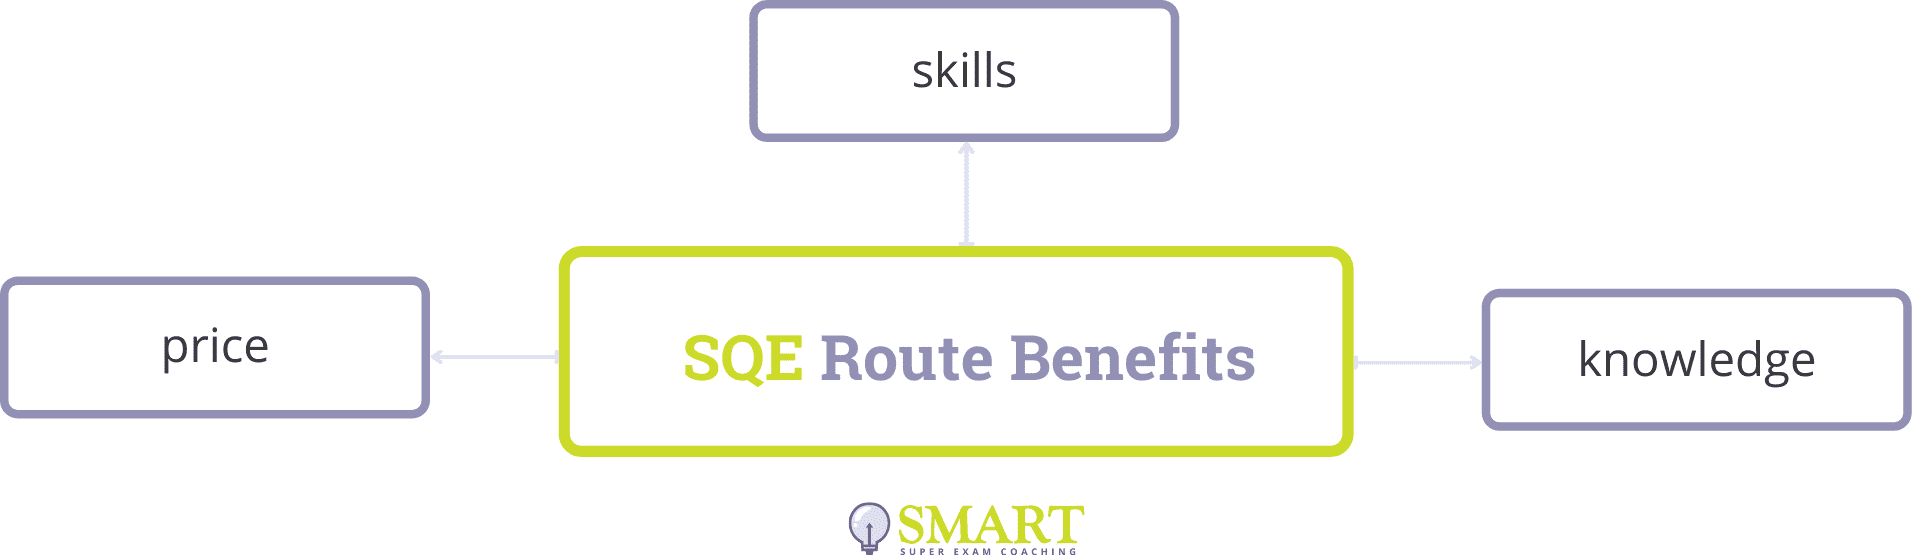 SQE Route Benefits